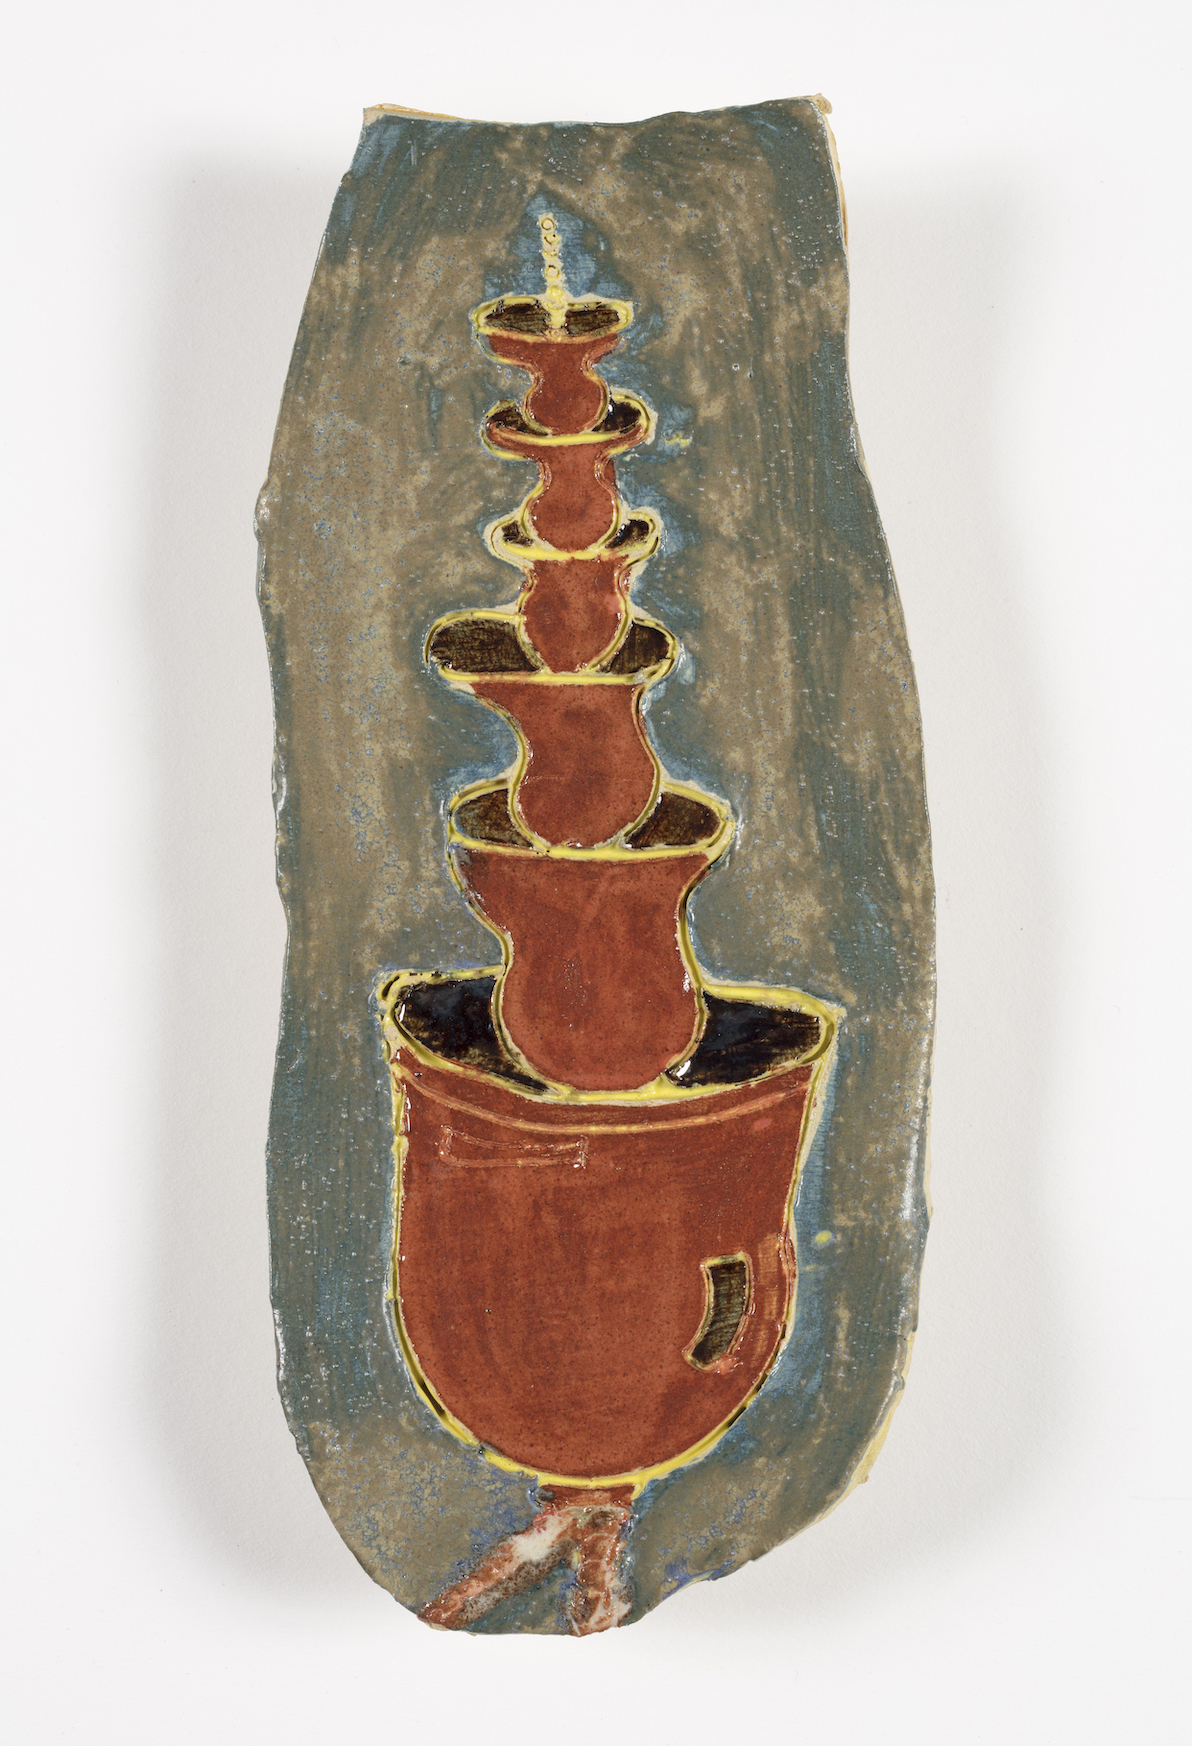 Kevin McNamee-Tweed.<em> Bells</em>, 2019. Glazed ceramic, 8 1/8 x 3 1/2 inches (20.6 x 8.9 cm) copy